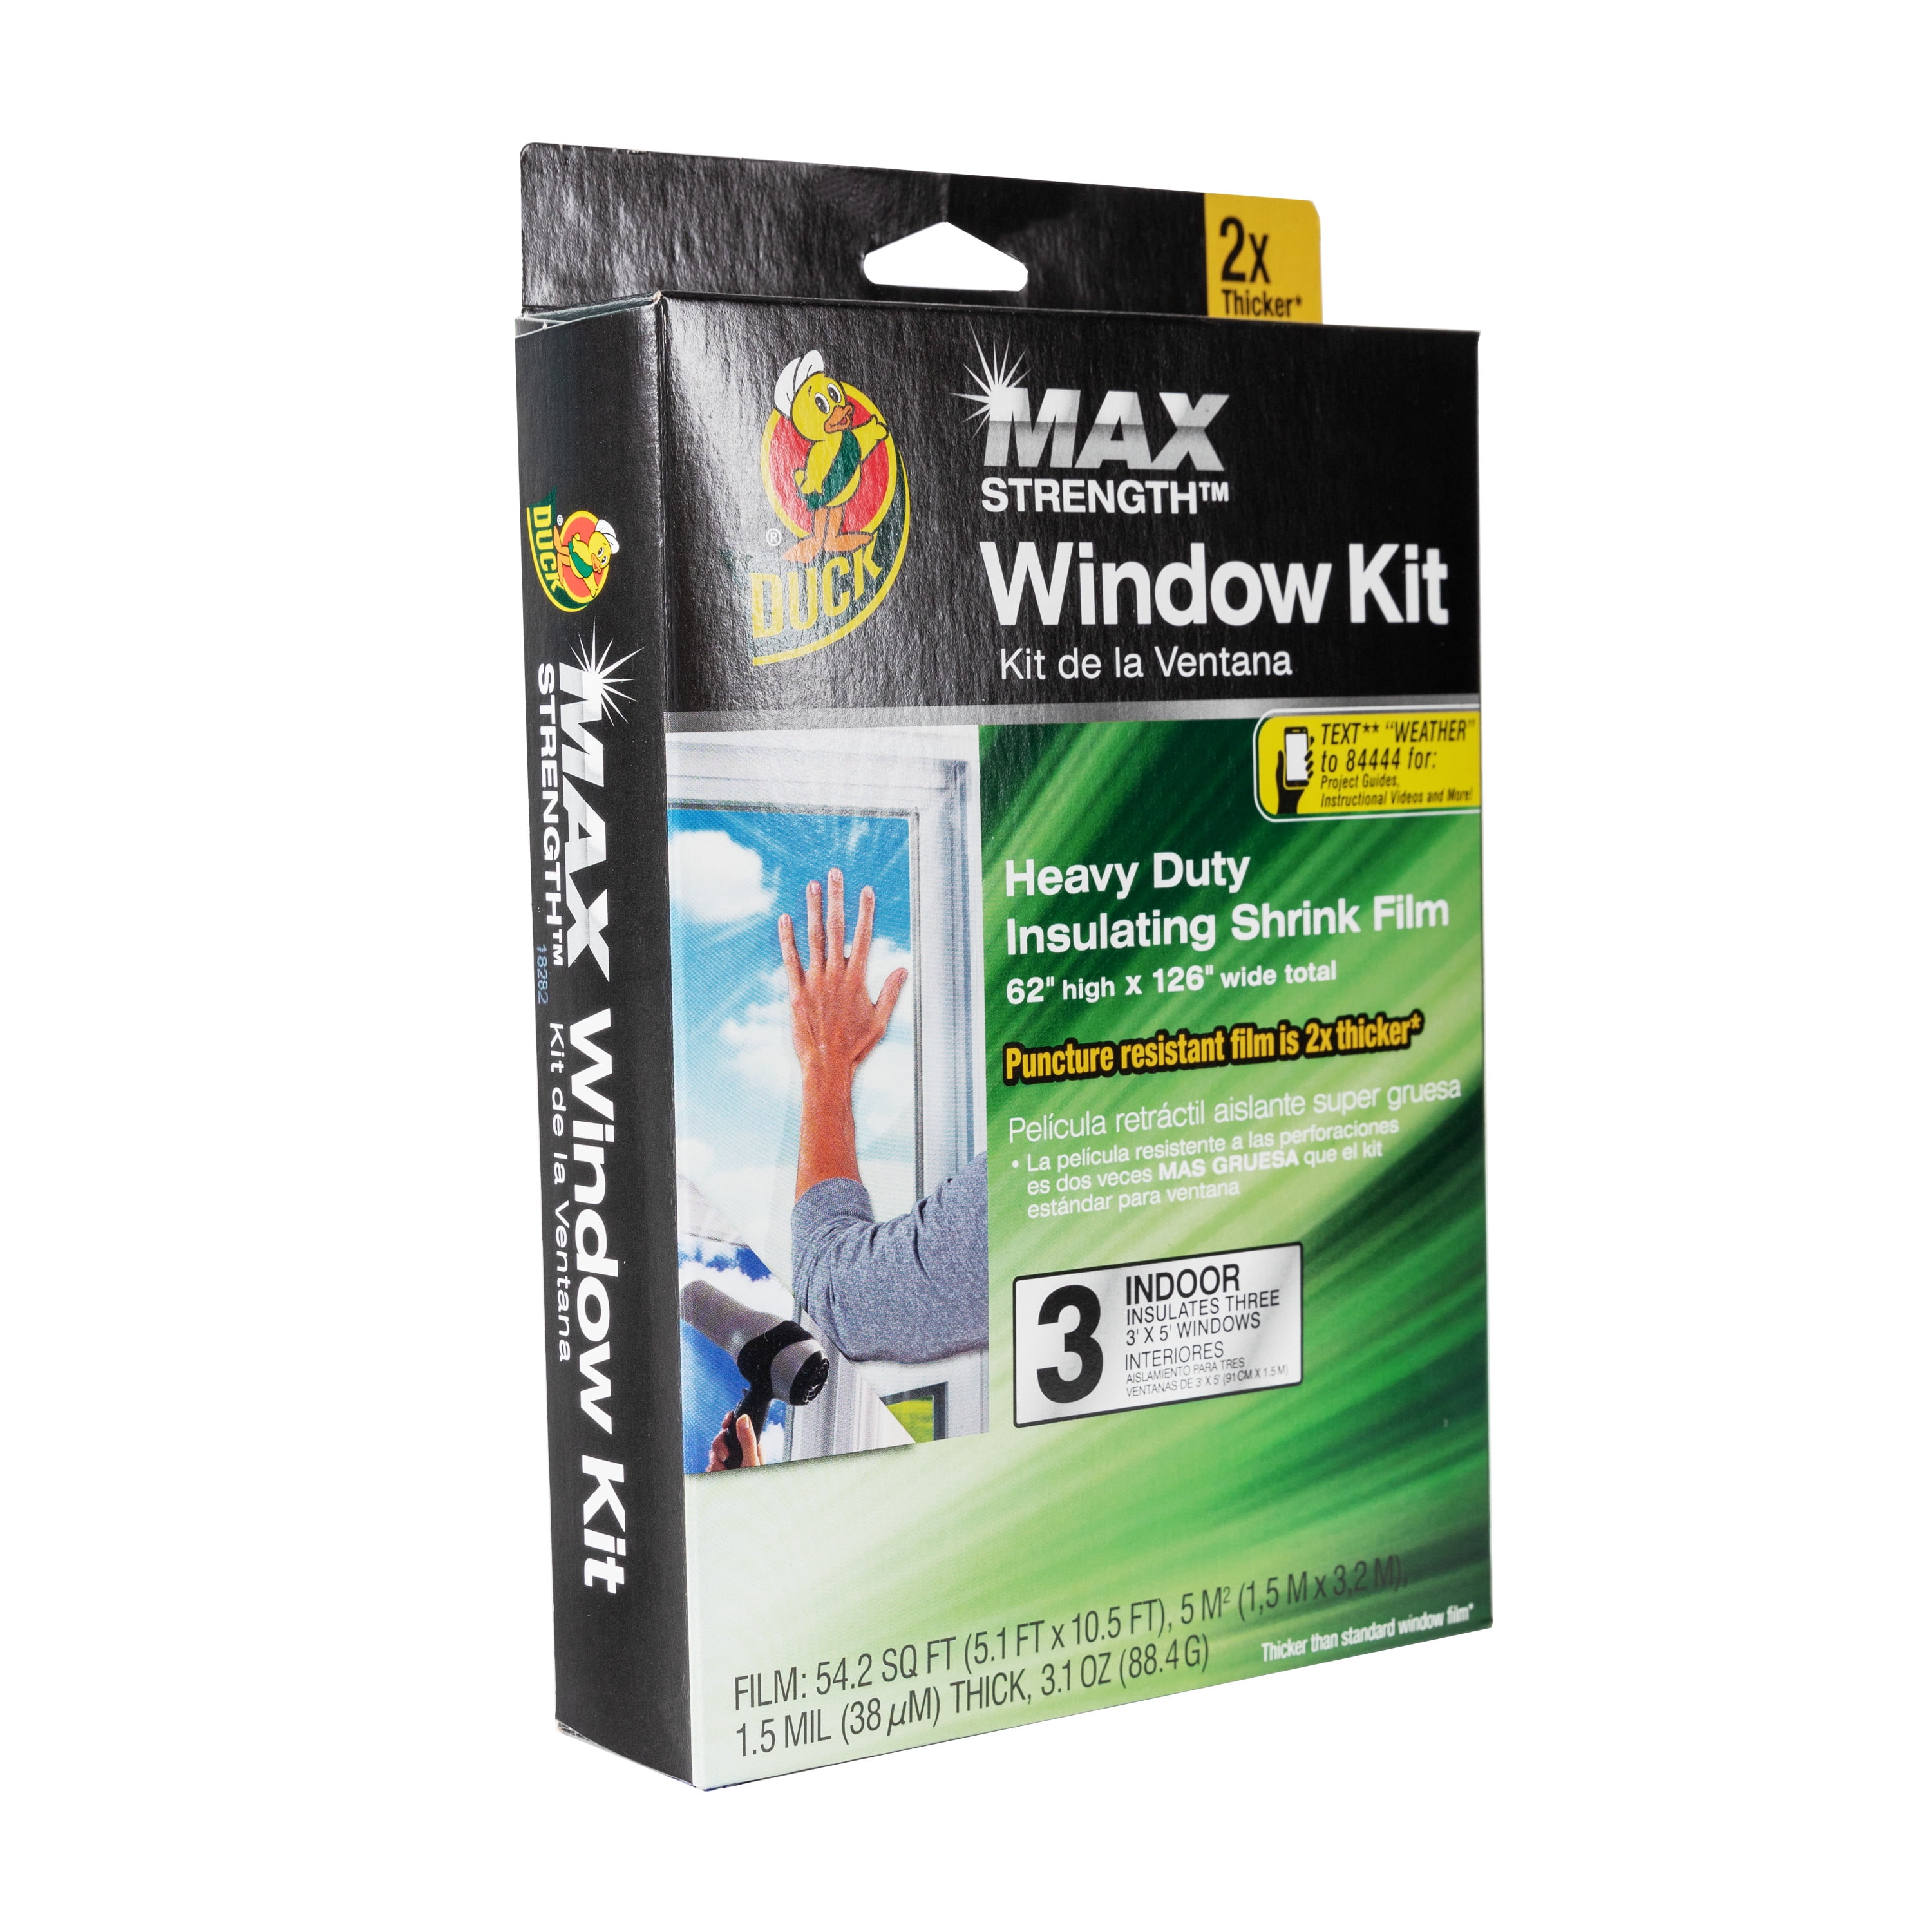 2 New Duck Heavy Duty Roll On Max Strength Window Insulation Kit Indoor 7' x 10' 